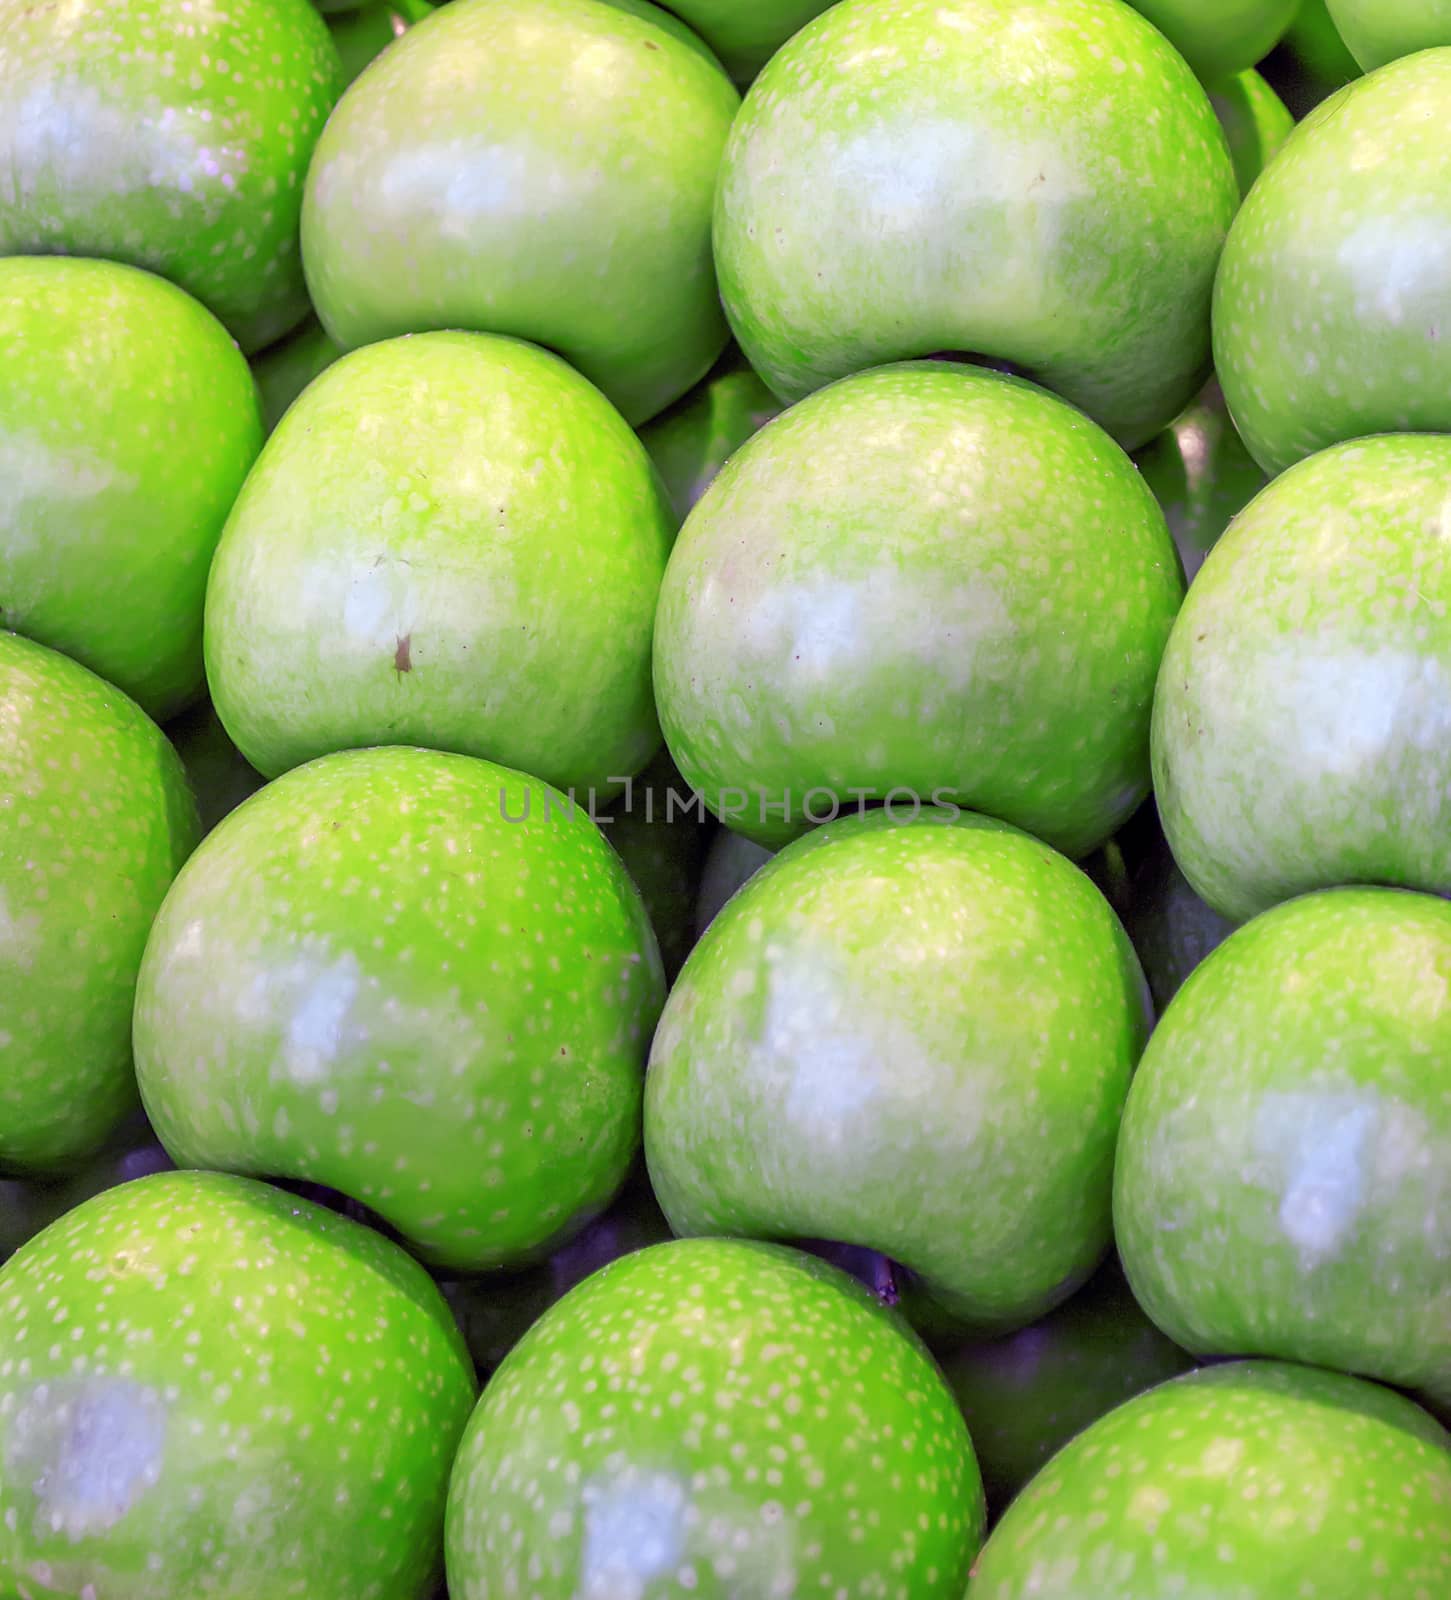 Bunch of green apples by rarrarorro